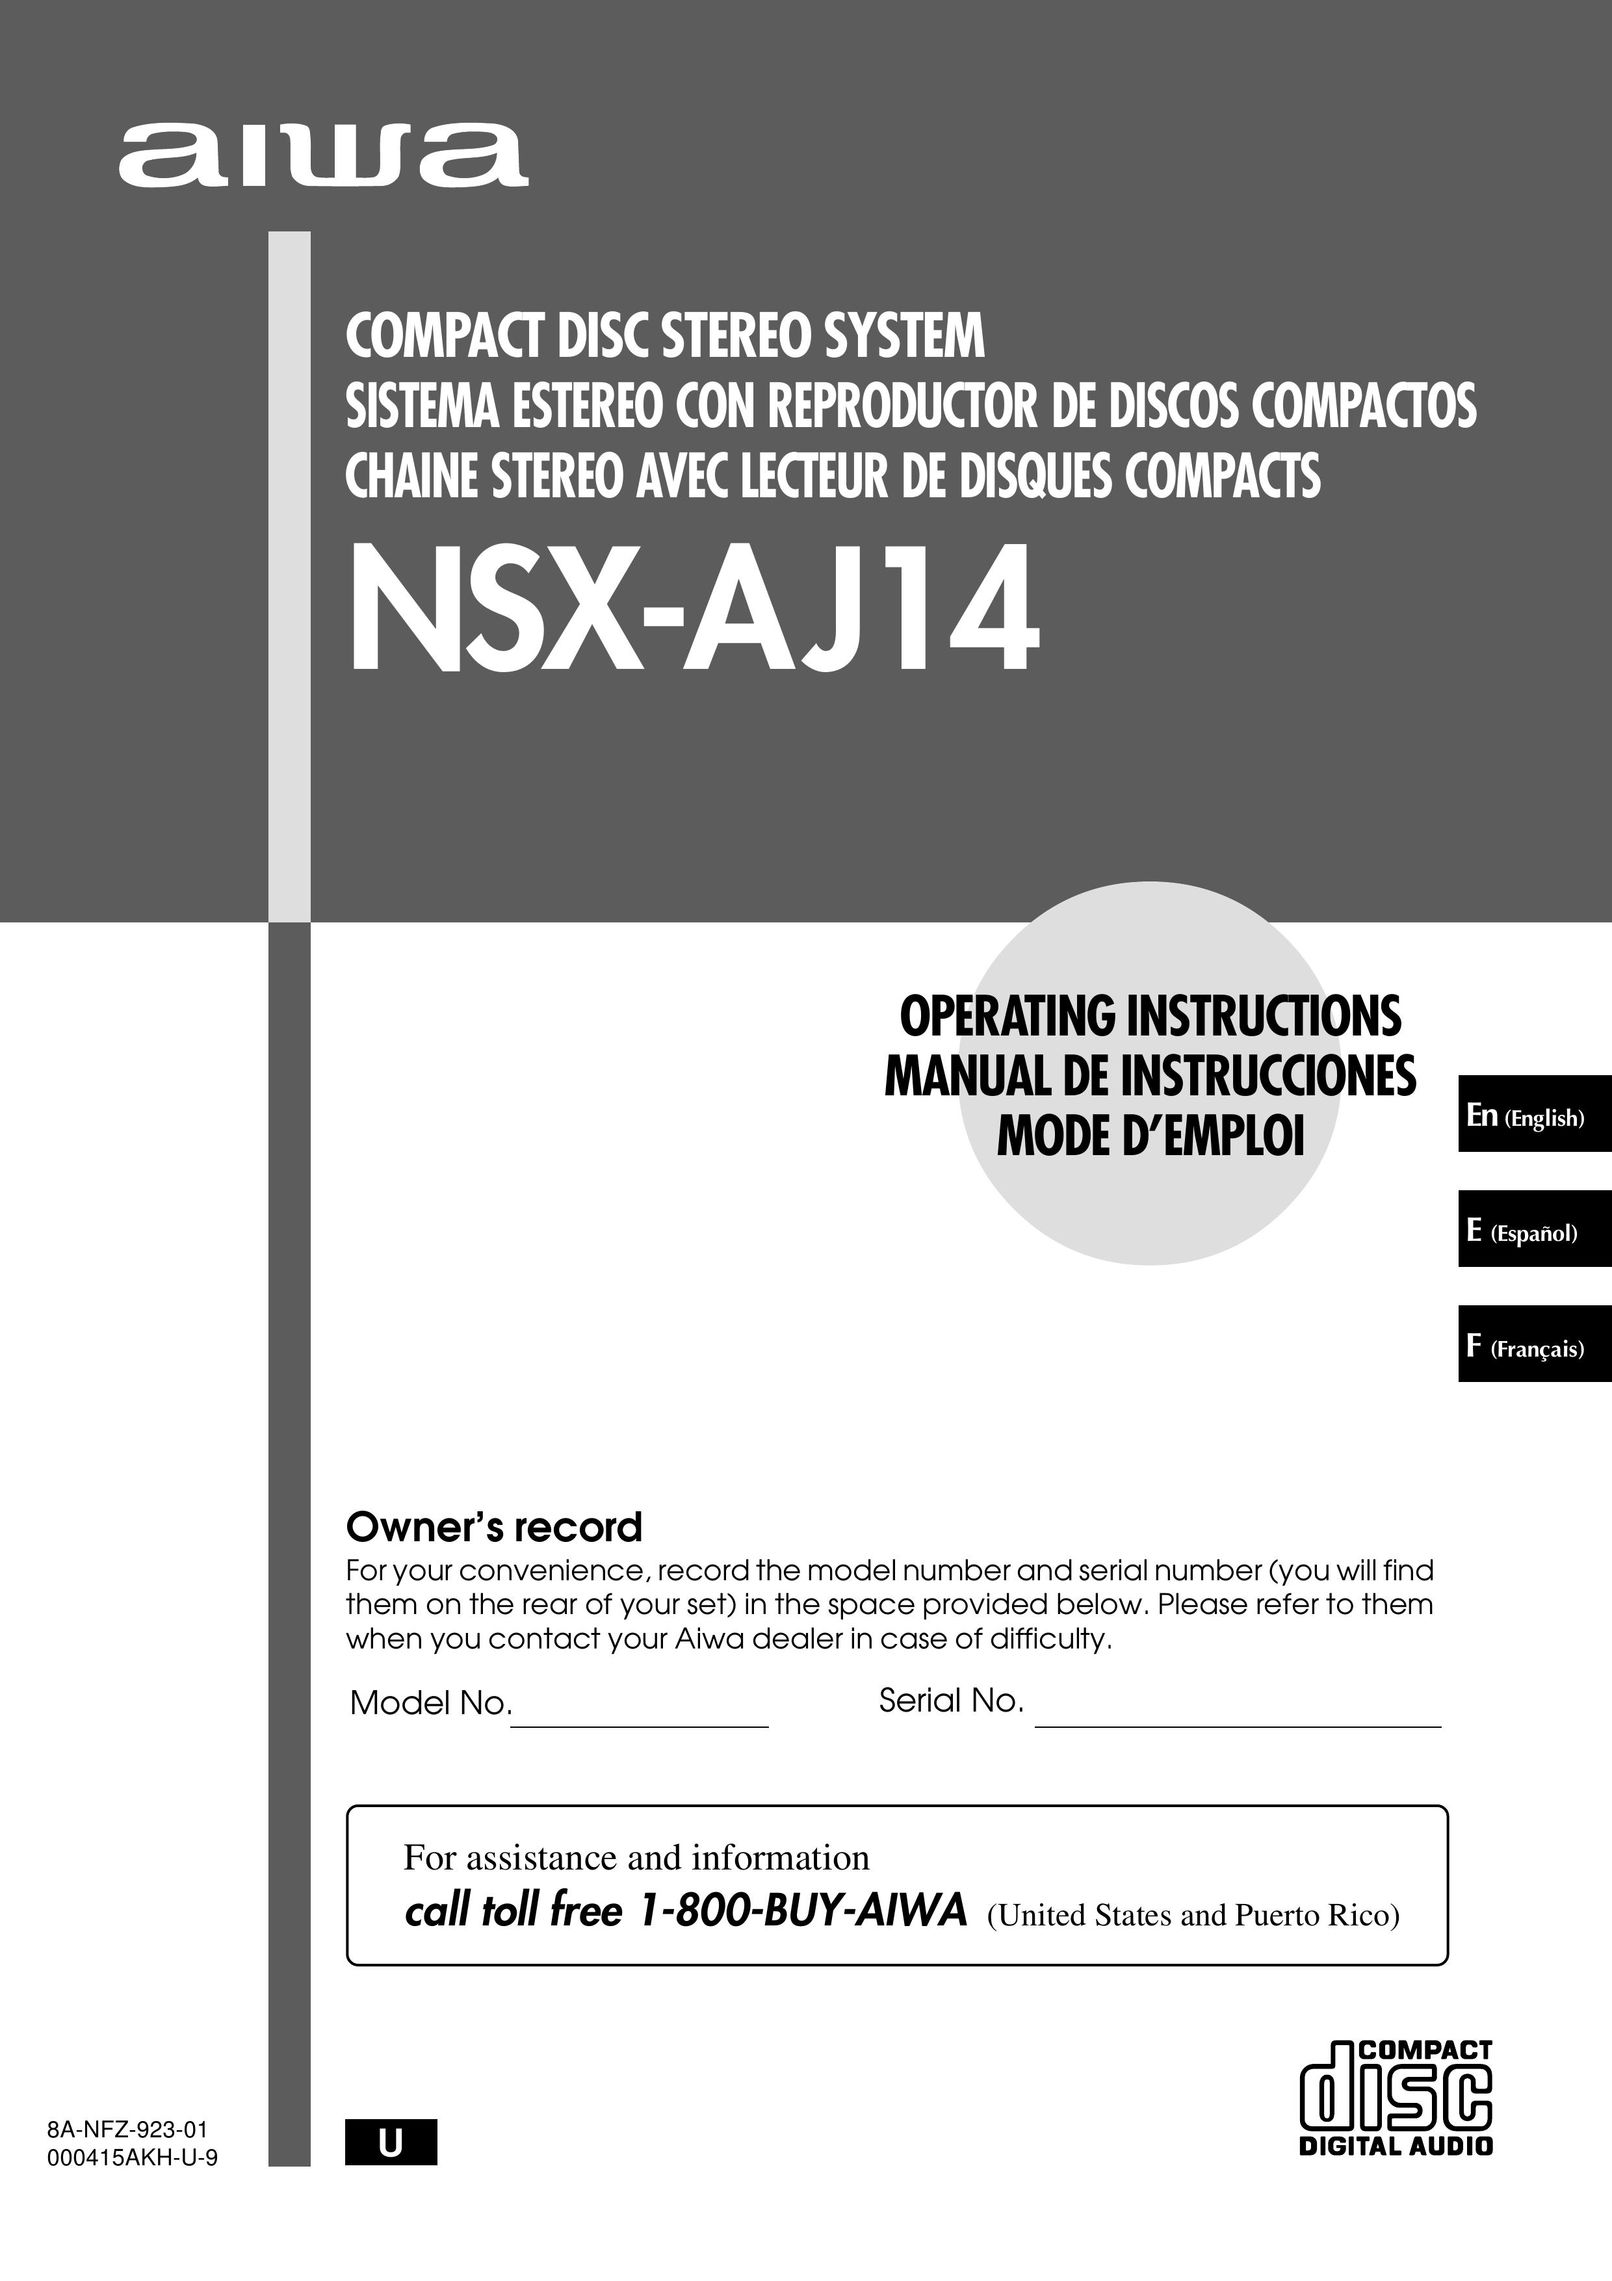 Aiwa NSX-AJ14 CD Player User Manual